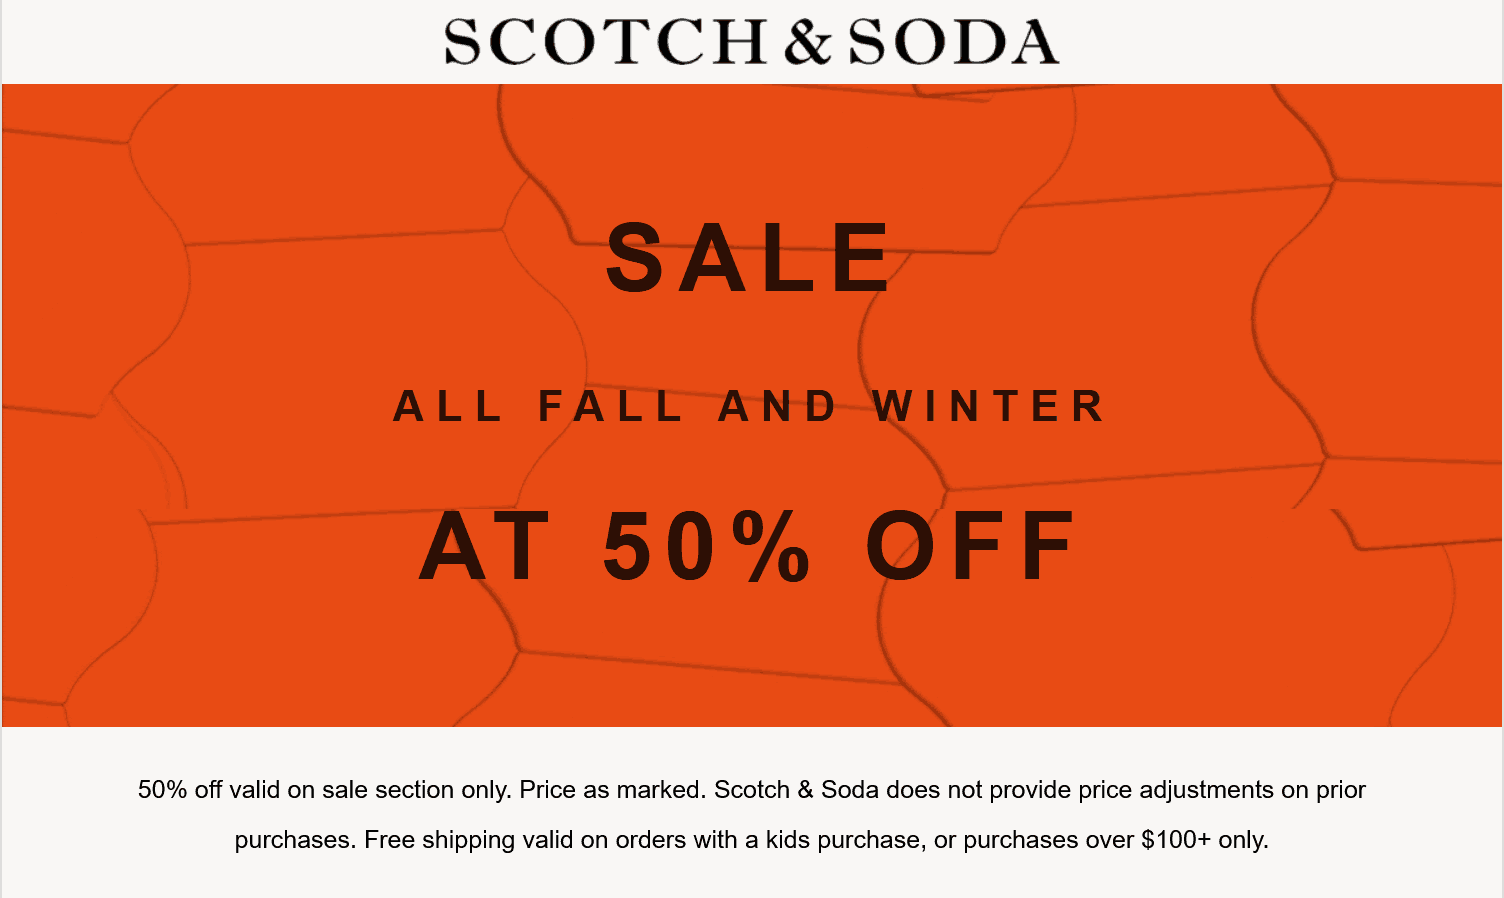 Scotch & Soda restaurants Coupon  50% off all fall and winter at Scotch & Soda #scotchsoda 